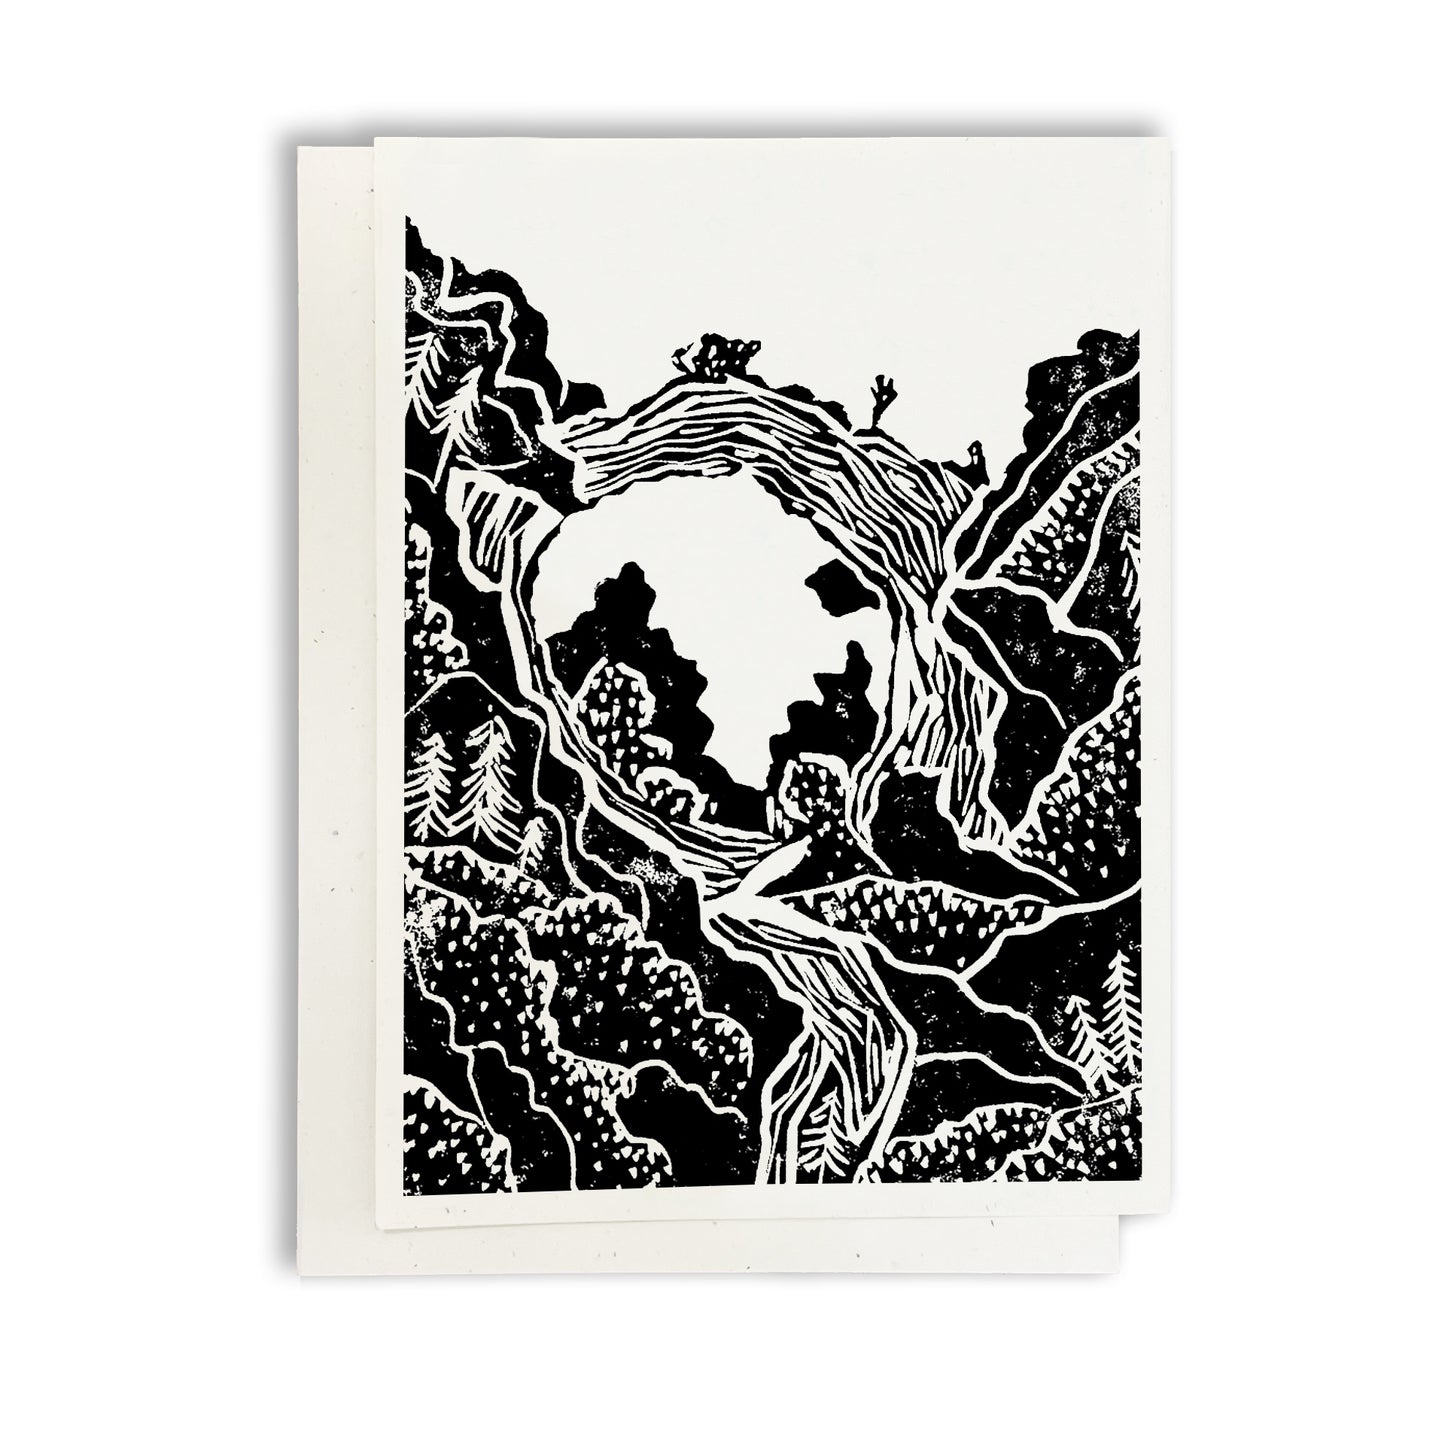 Arch Rock, Mackinac Island greeting card by Natalia Wohletz of Peninsula Prints.